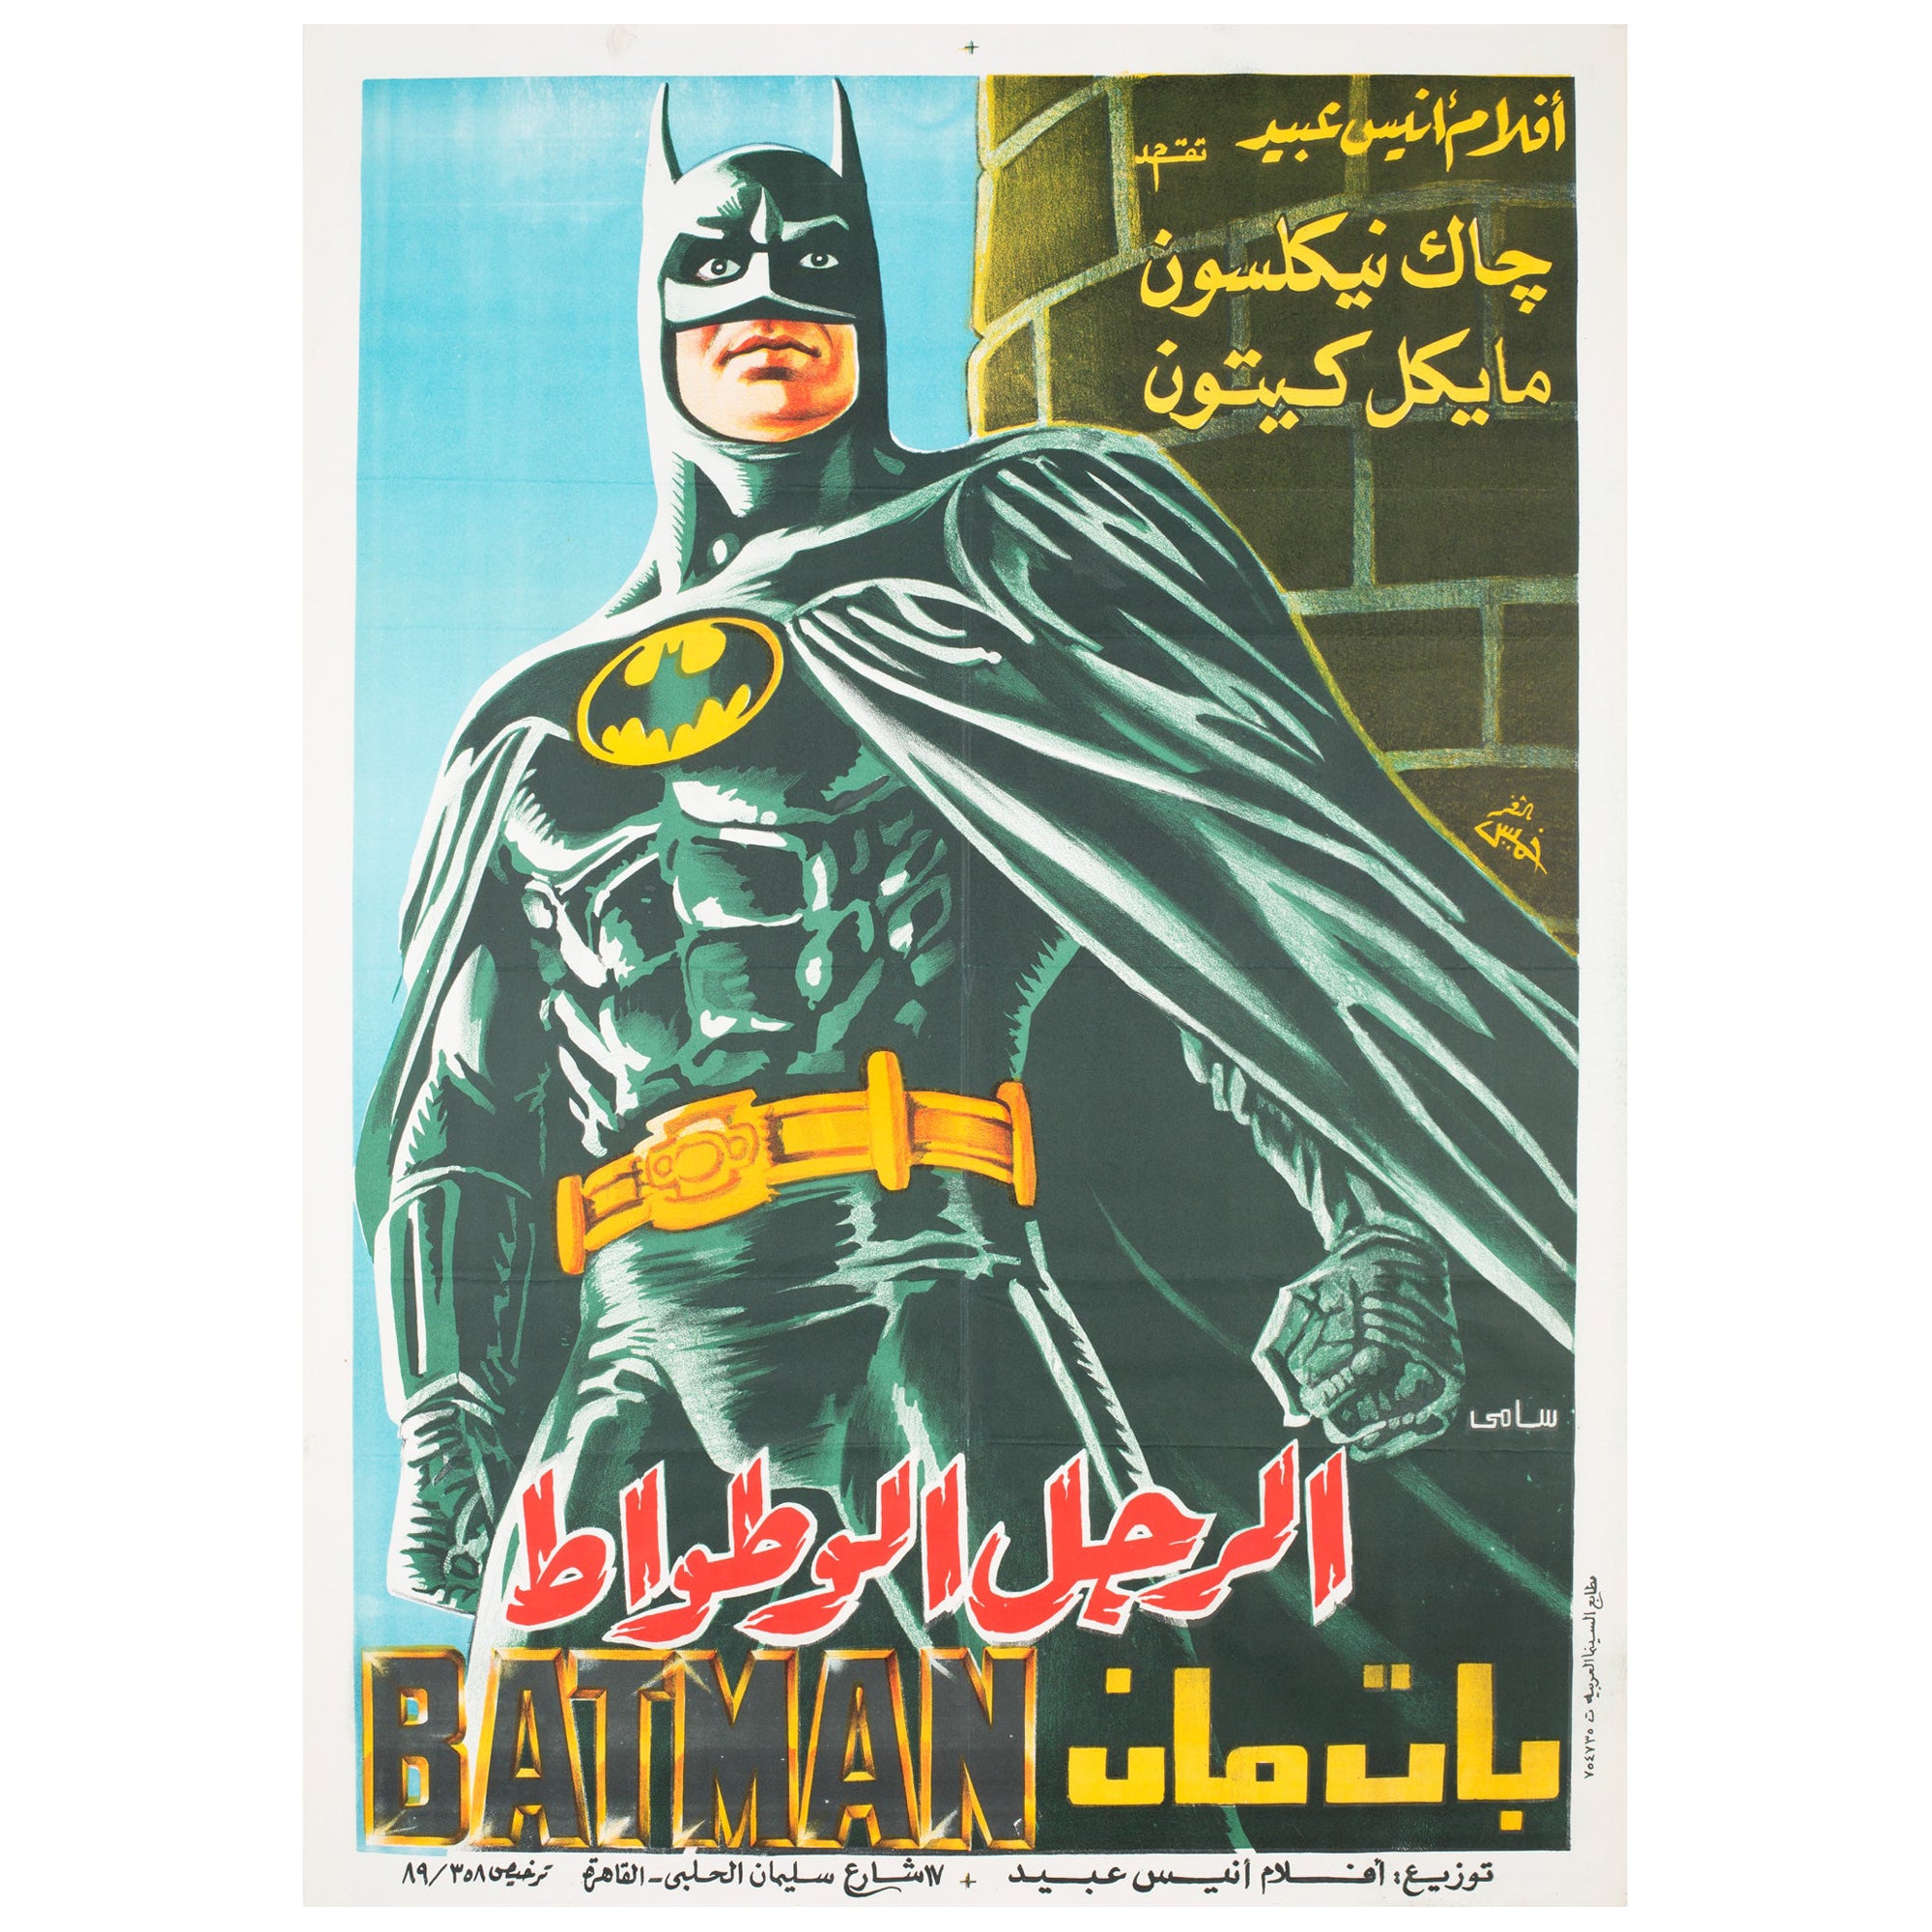 Original Egyptian Batman Film Movie Poster, 1989